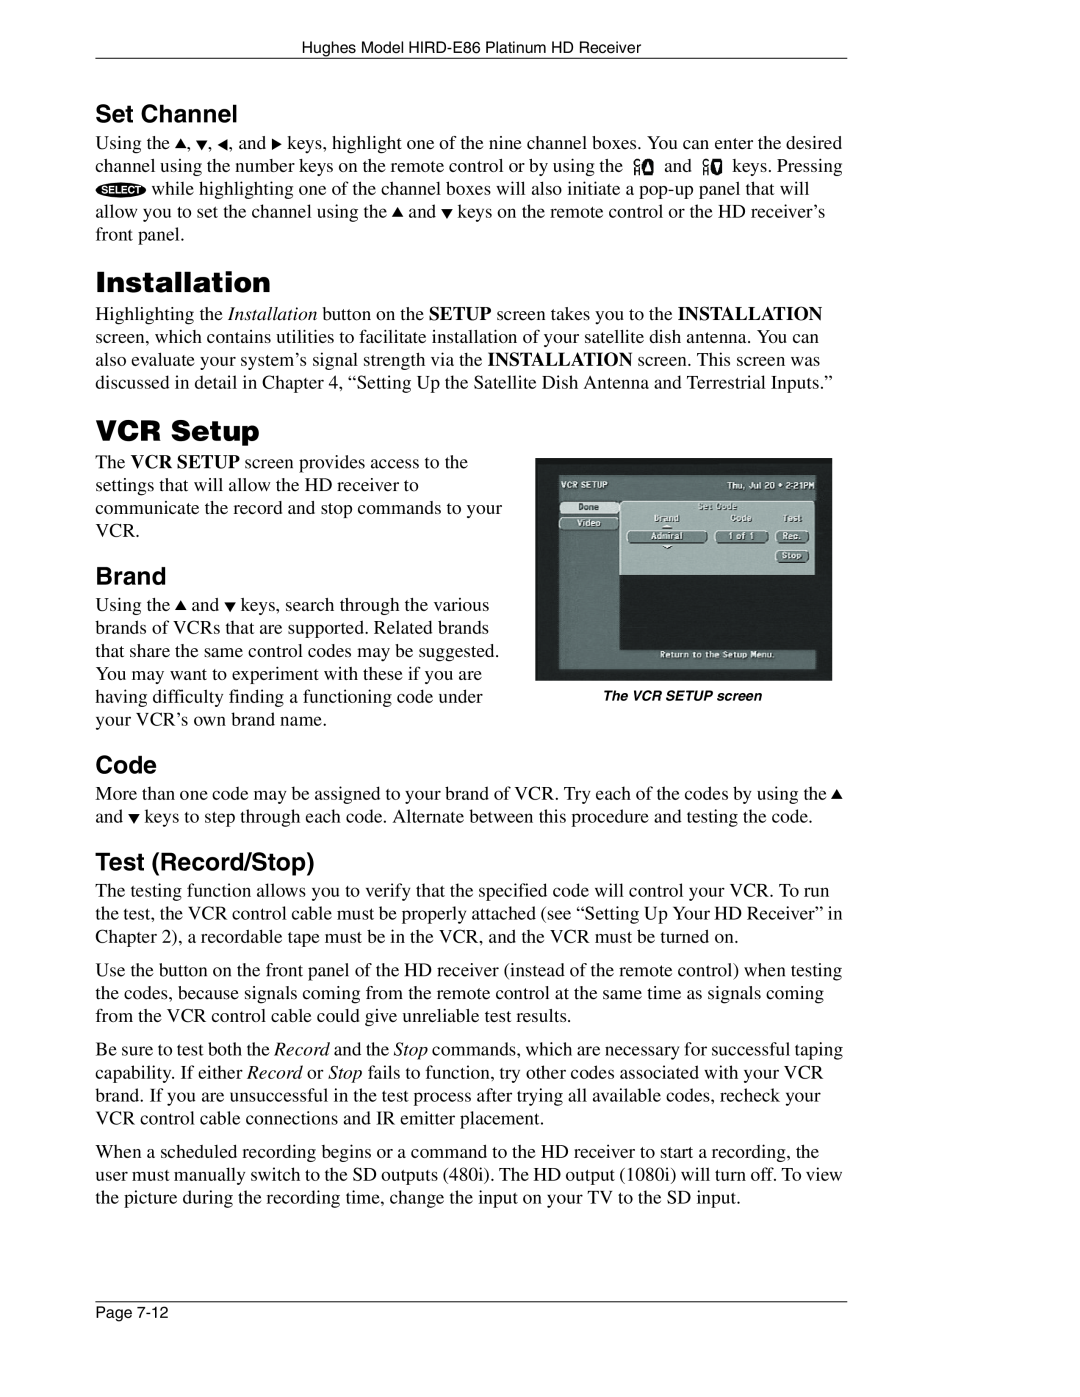 DirecTV HIRD-E86 manual Installation, VCR Setup, Set Channel, Brand, Code, Test Record/Stop 